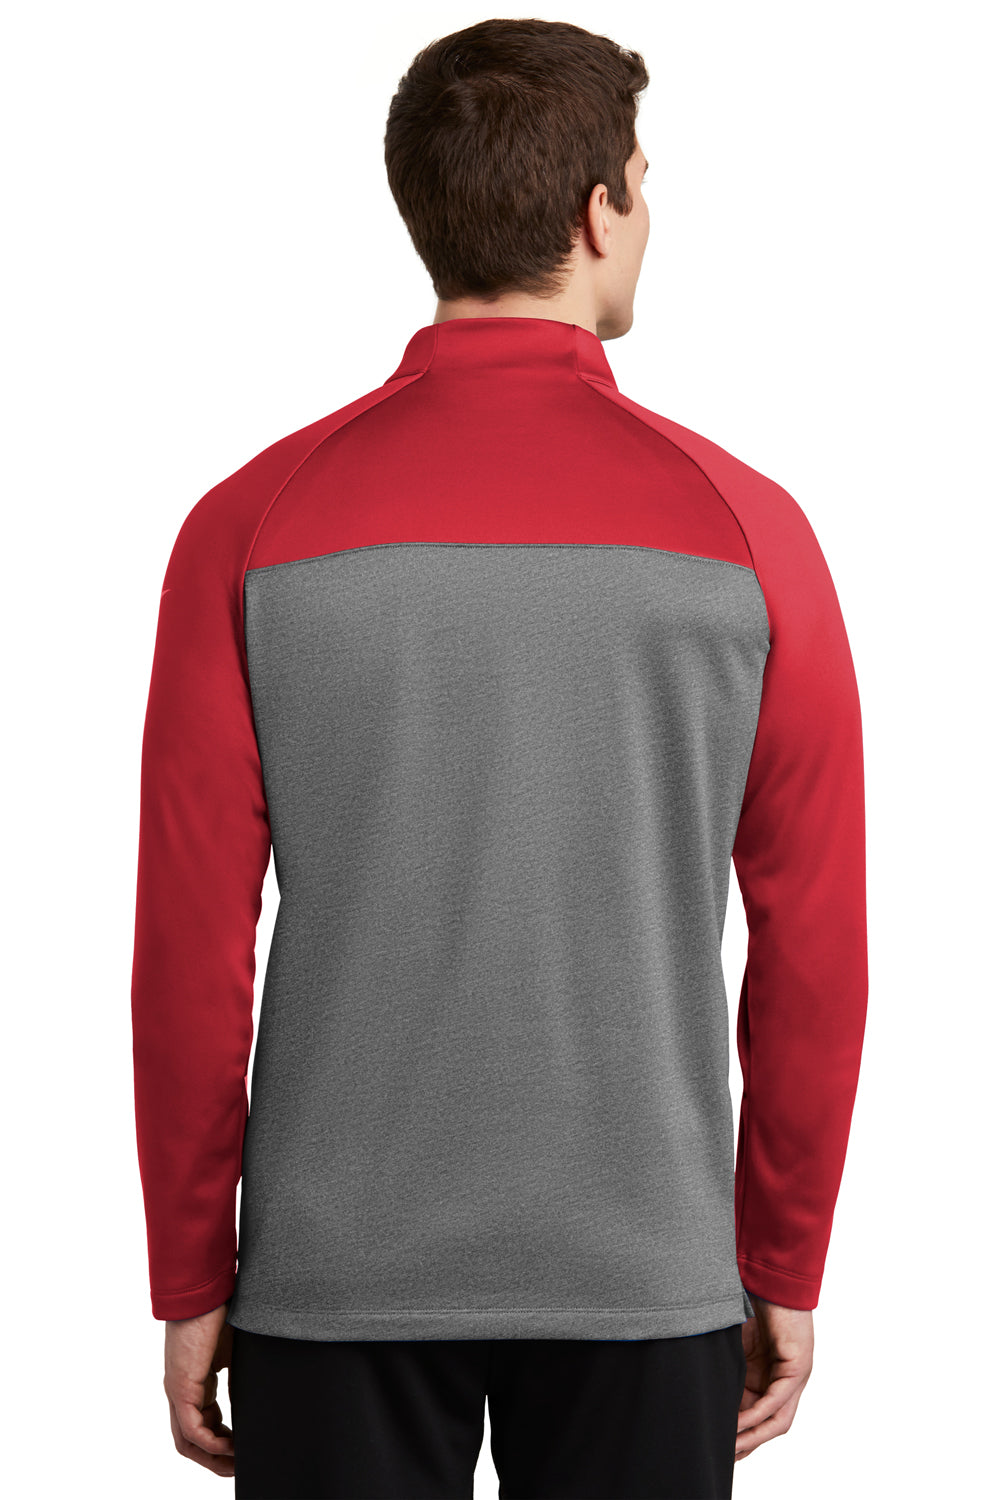 Nike NKAH6254 Mens Therma-Fit Moisture Wicking Fleece 1/4 Zip Sweatshirt Gym Red/Heather Grey Model Back